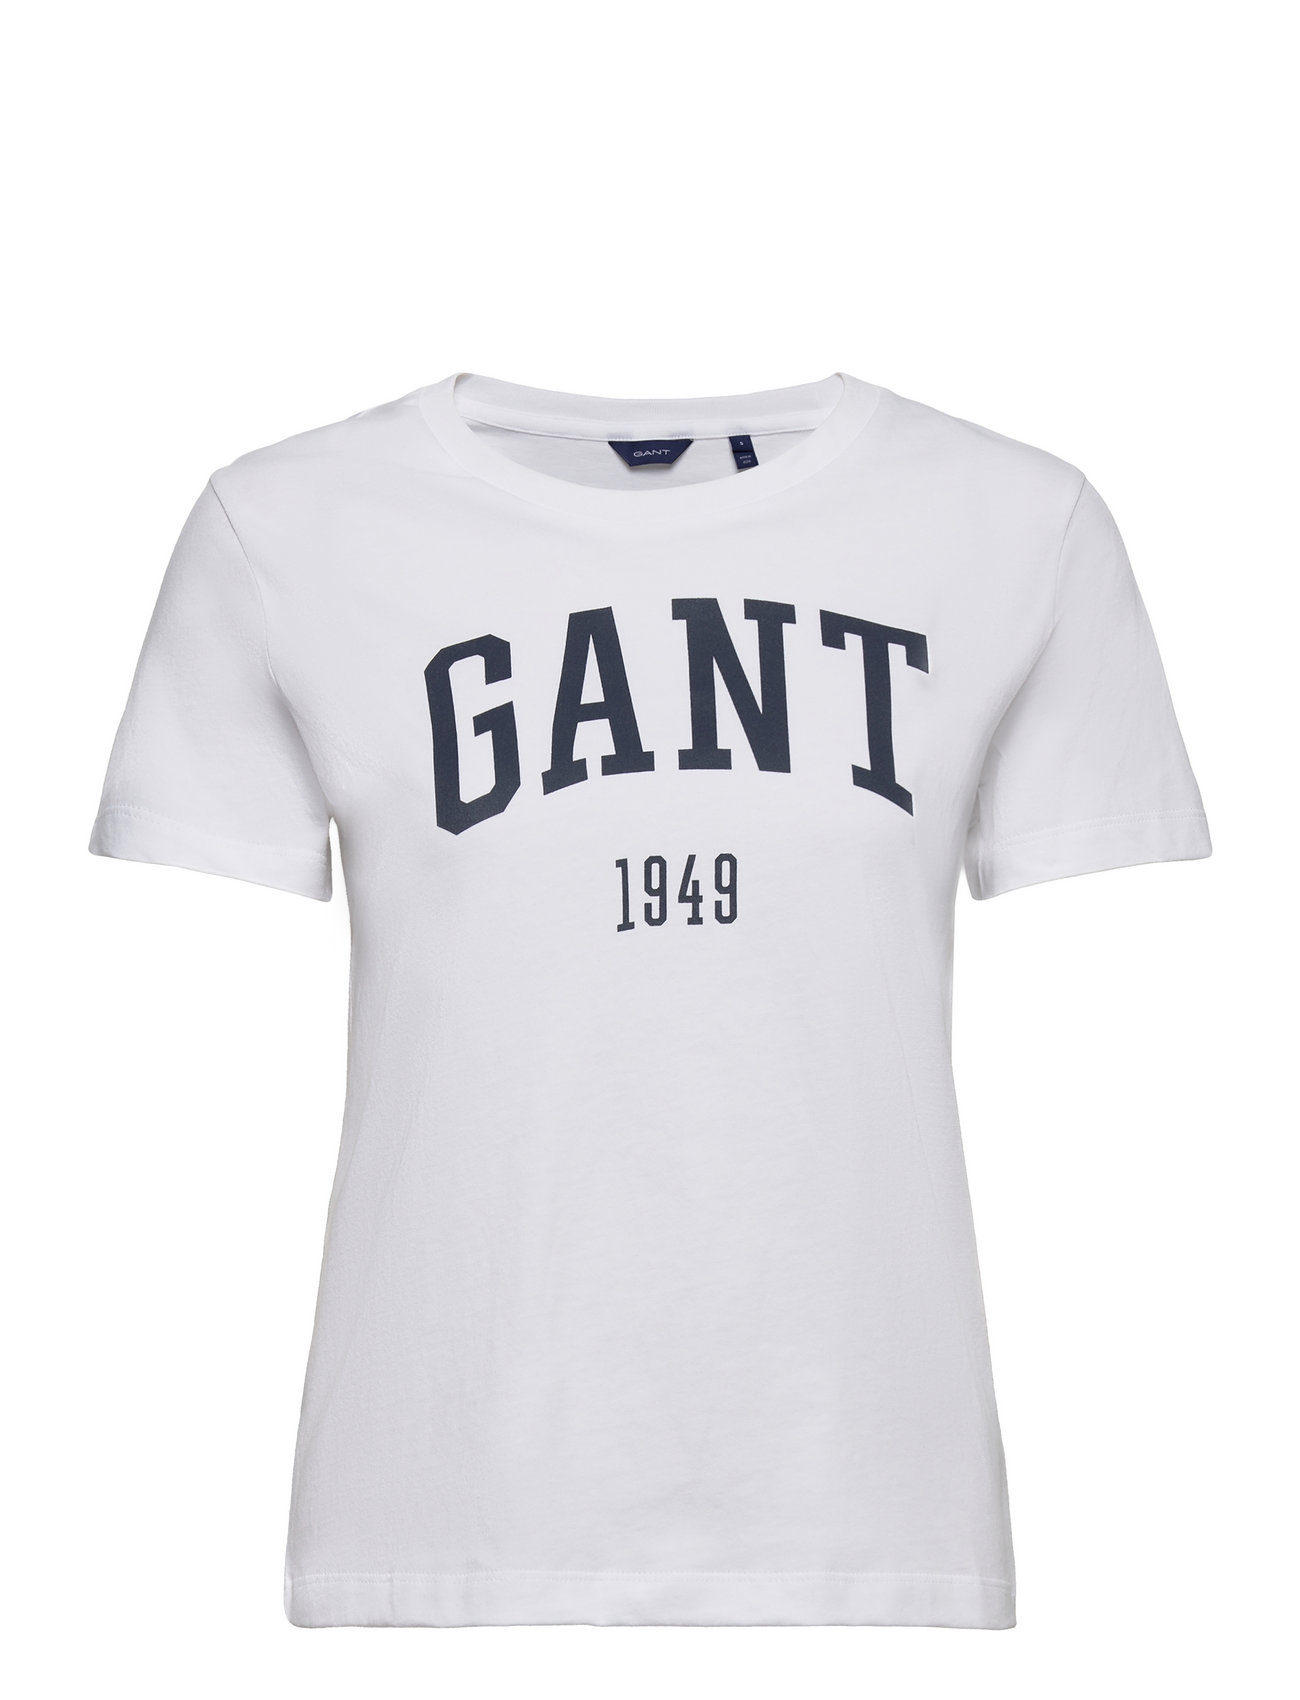 Beregn masse lave et eksperiment GANT Logo Ss T-shirt - T-shirts - Boozt.com